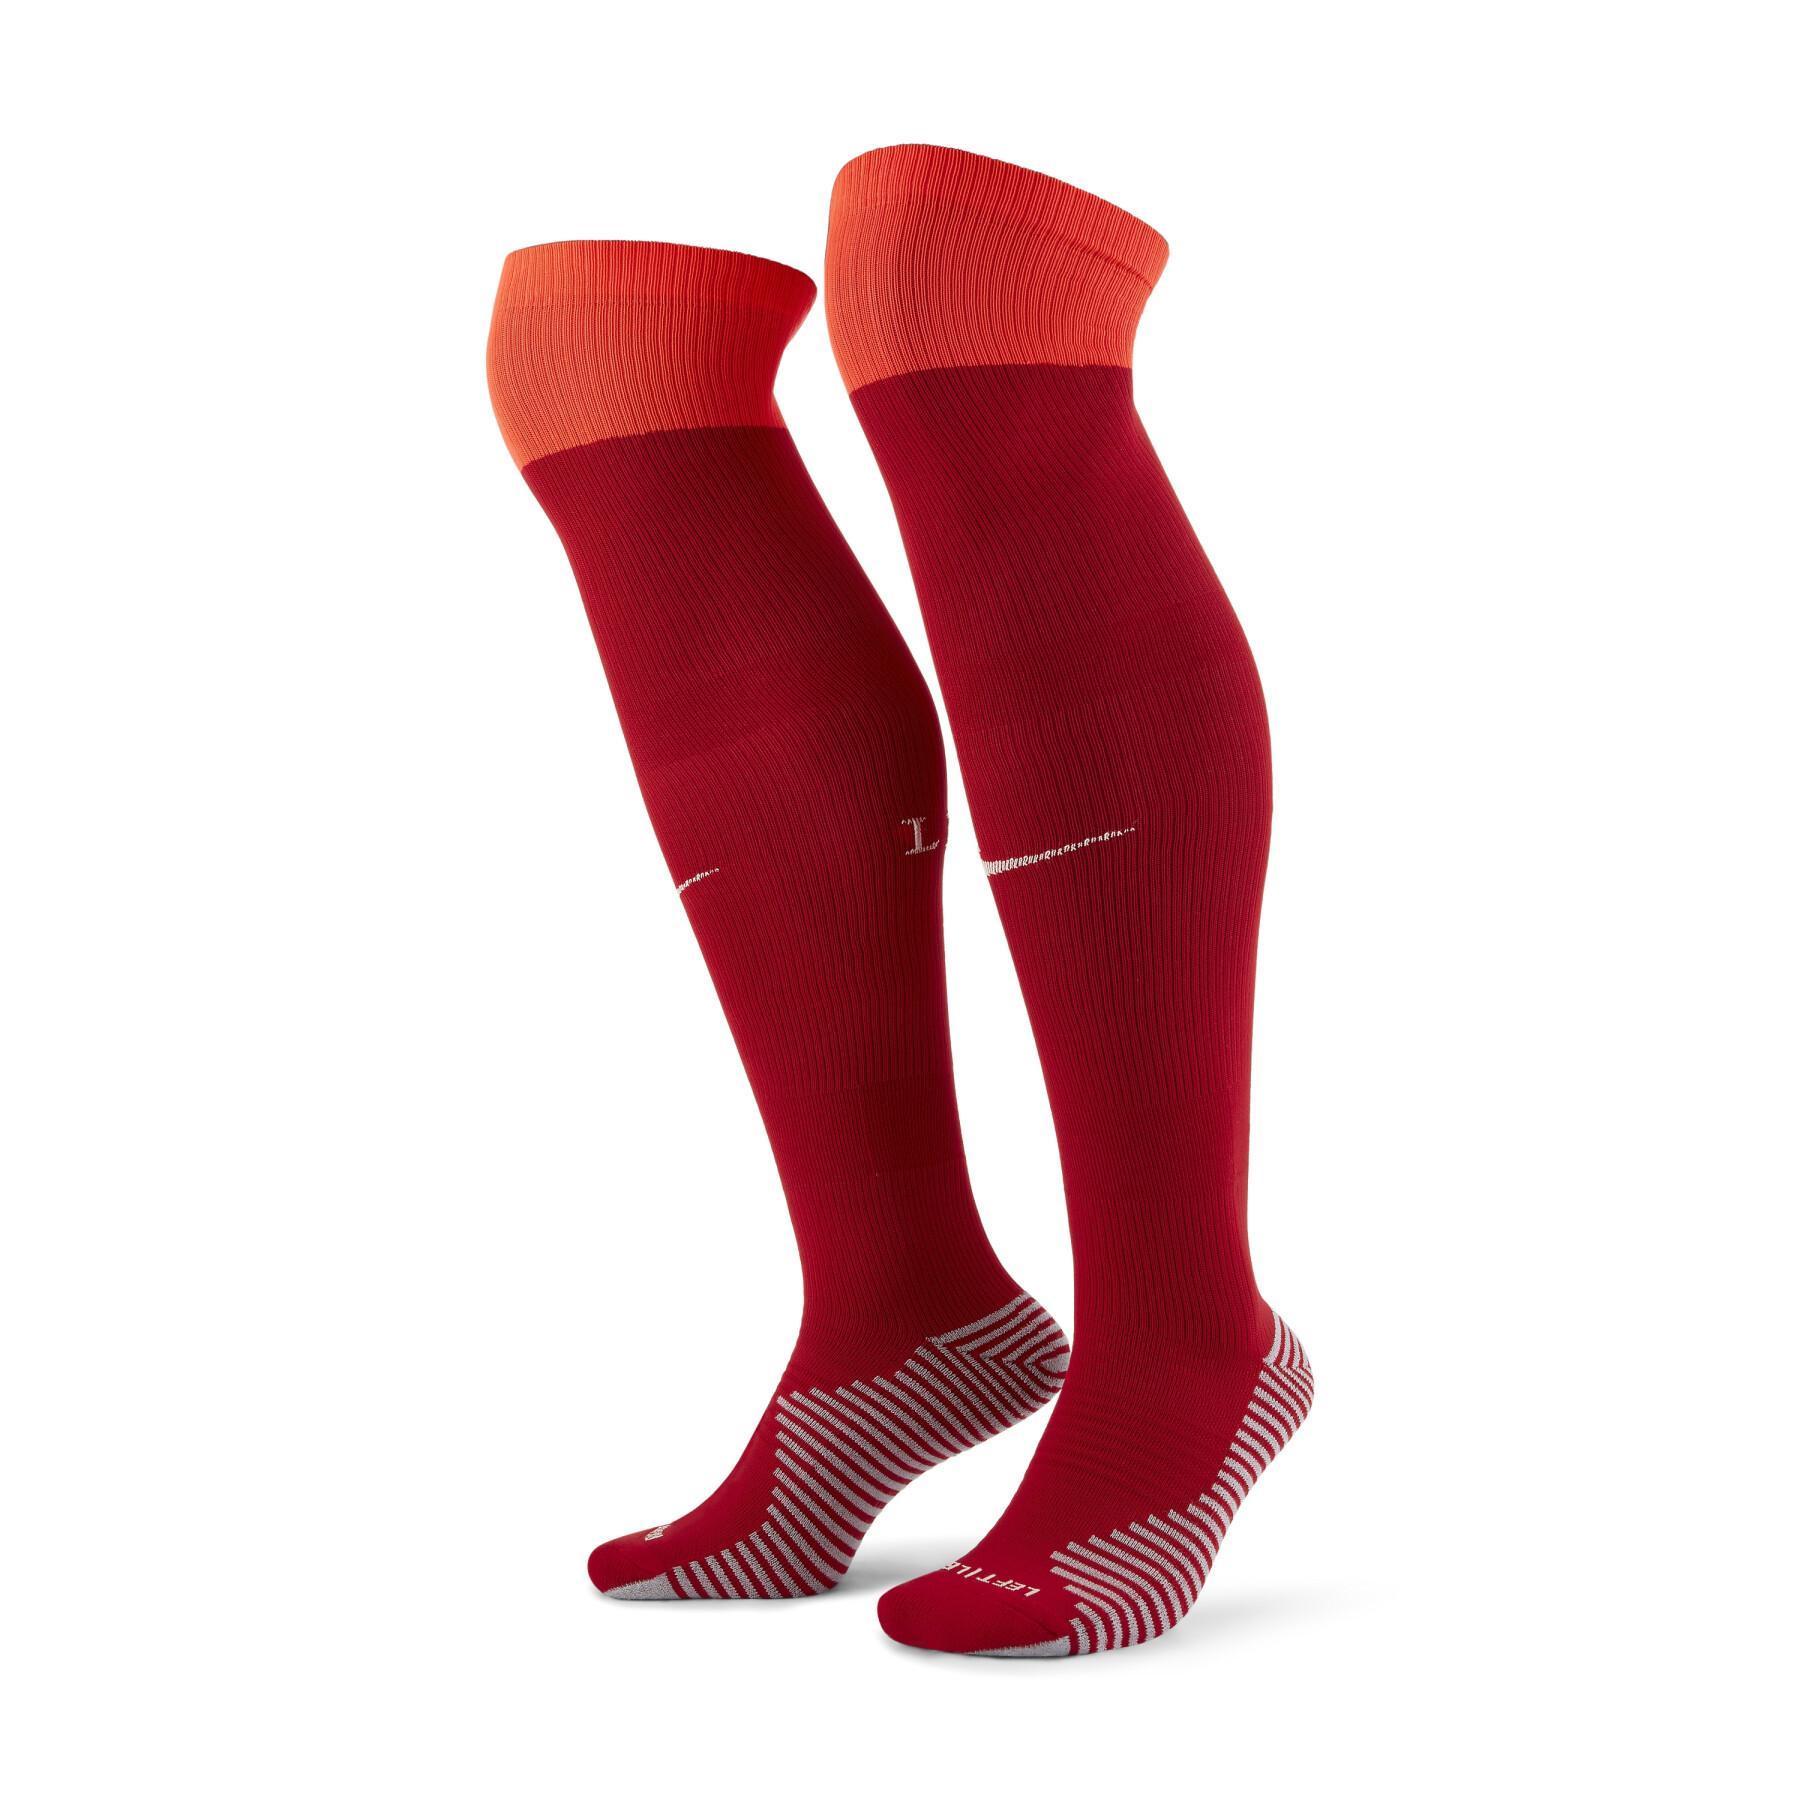 Home socks Liverpool FC 2021/22